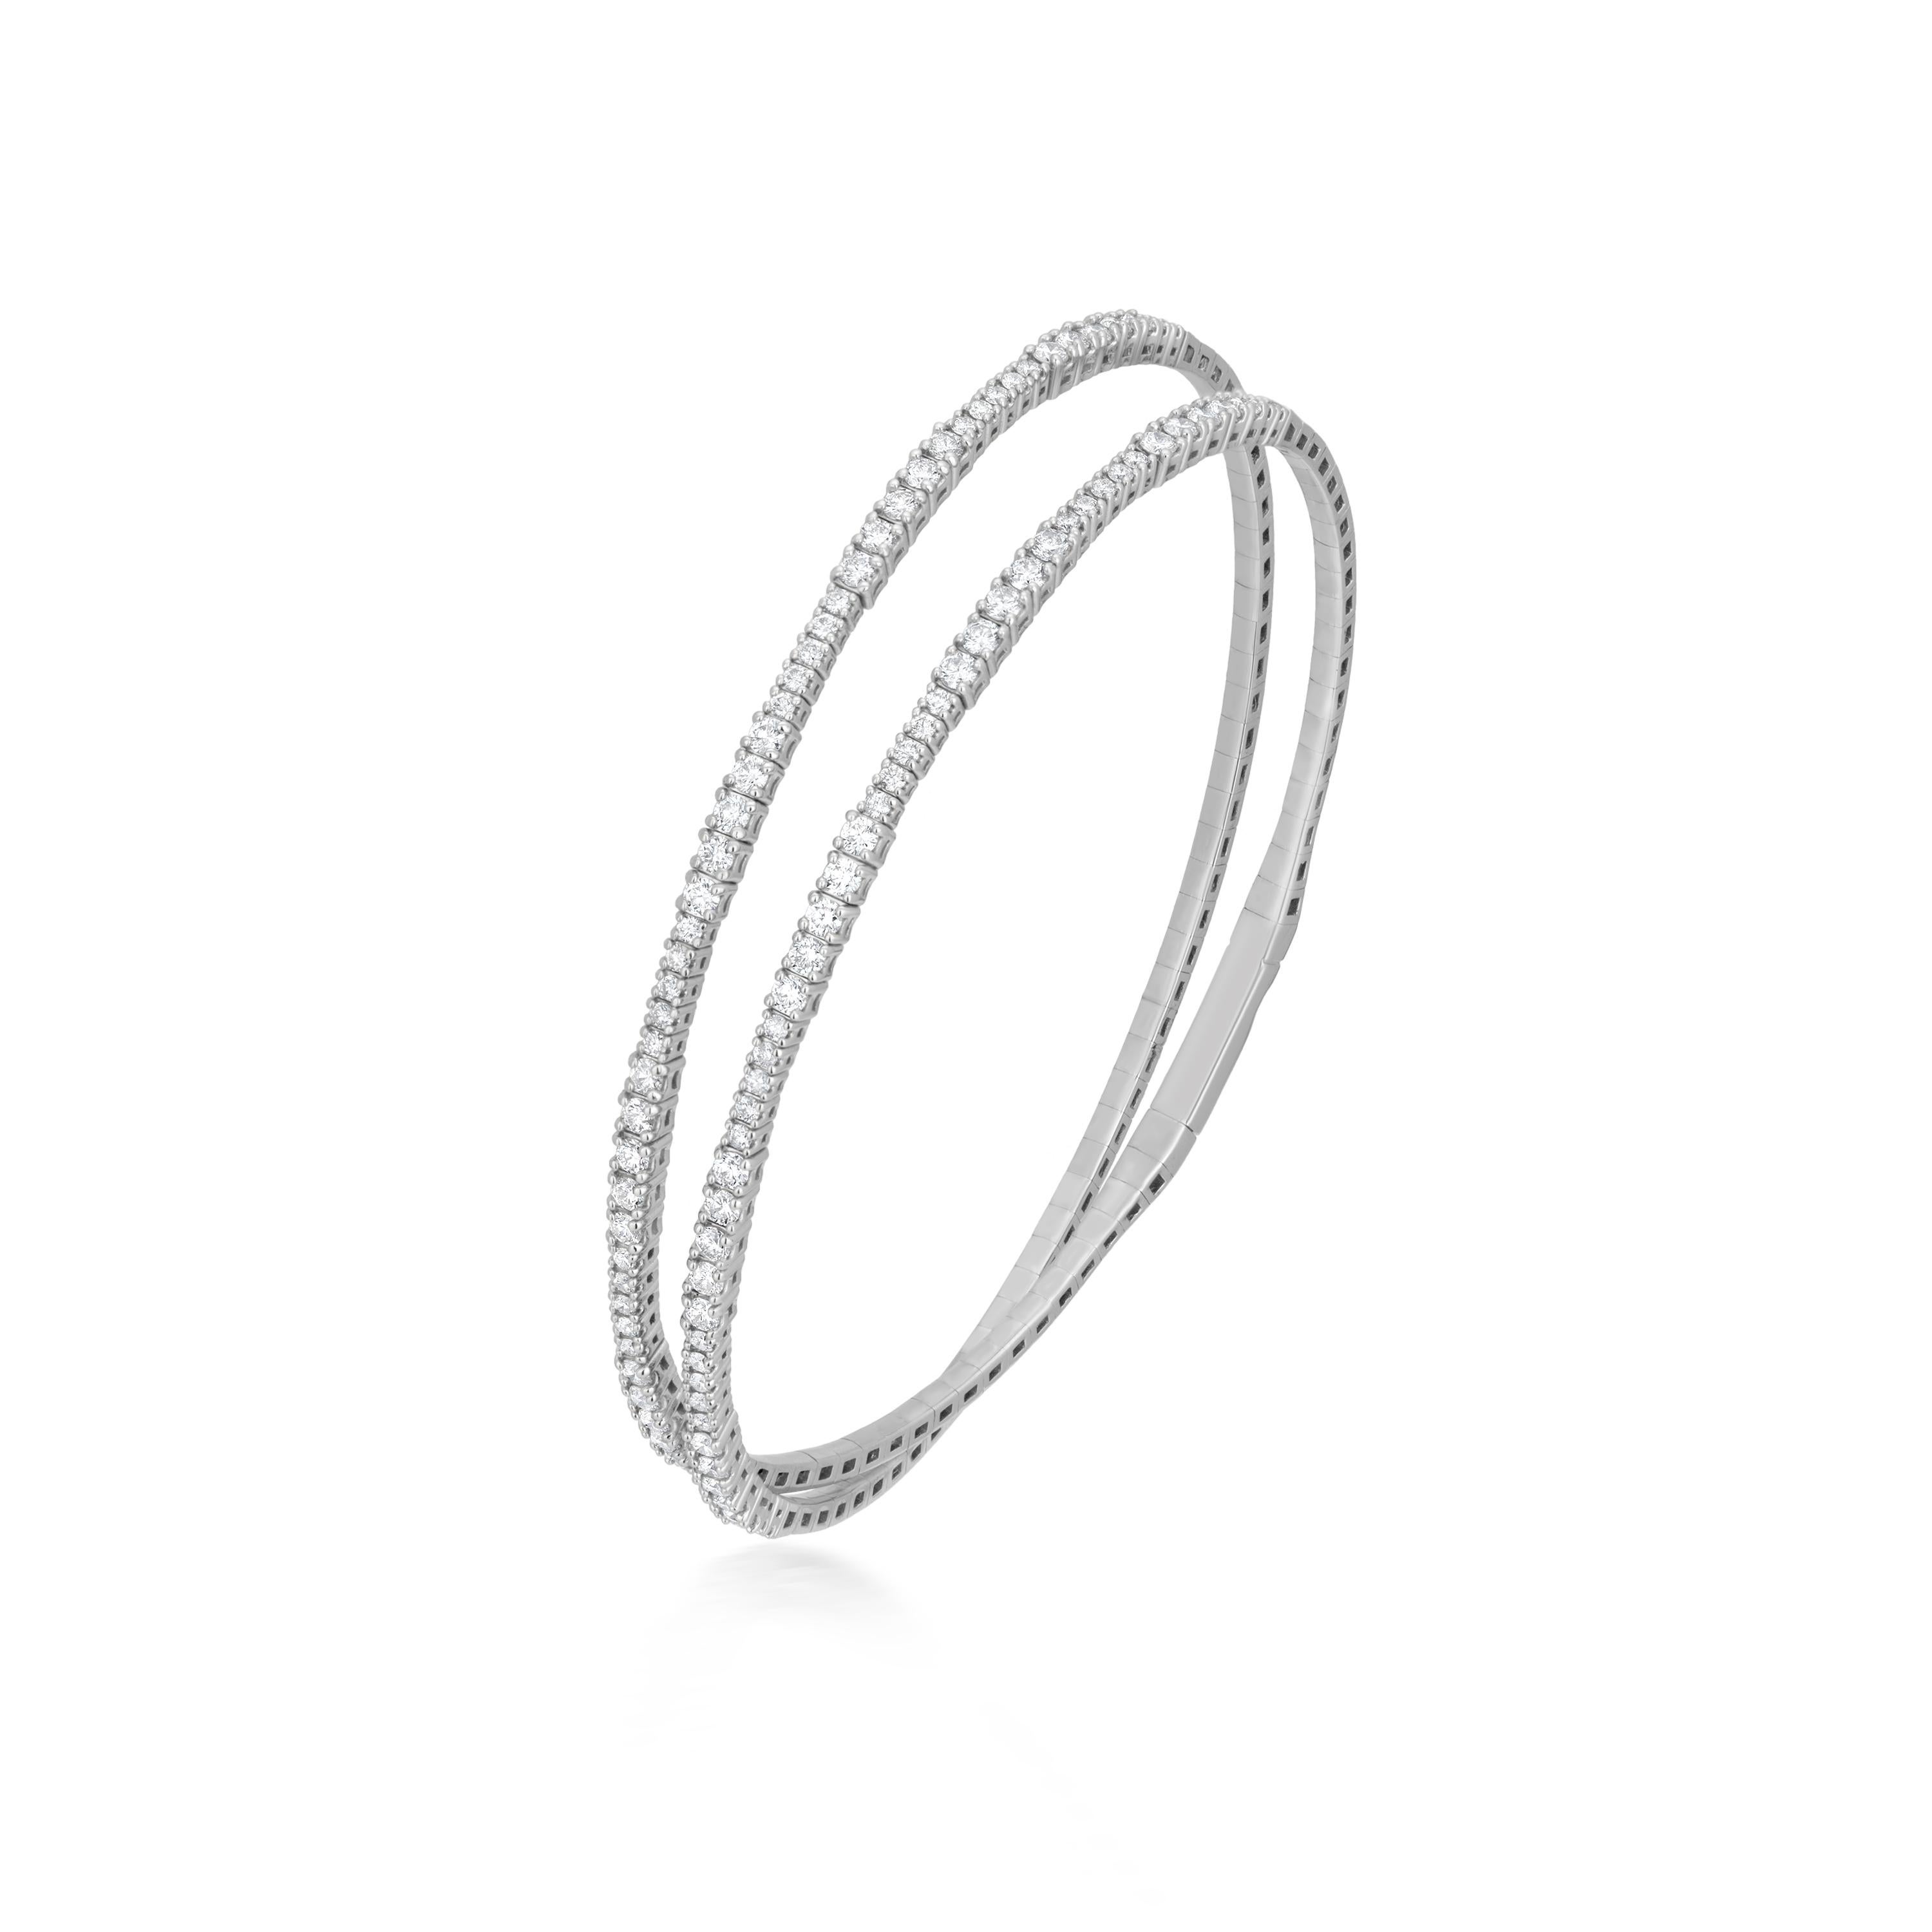 Contemporary Luxle 1.81cttw. Diamond Bangle Bracelet in 18k White Gold For Sale